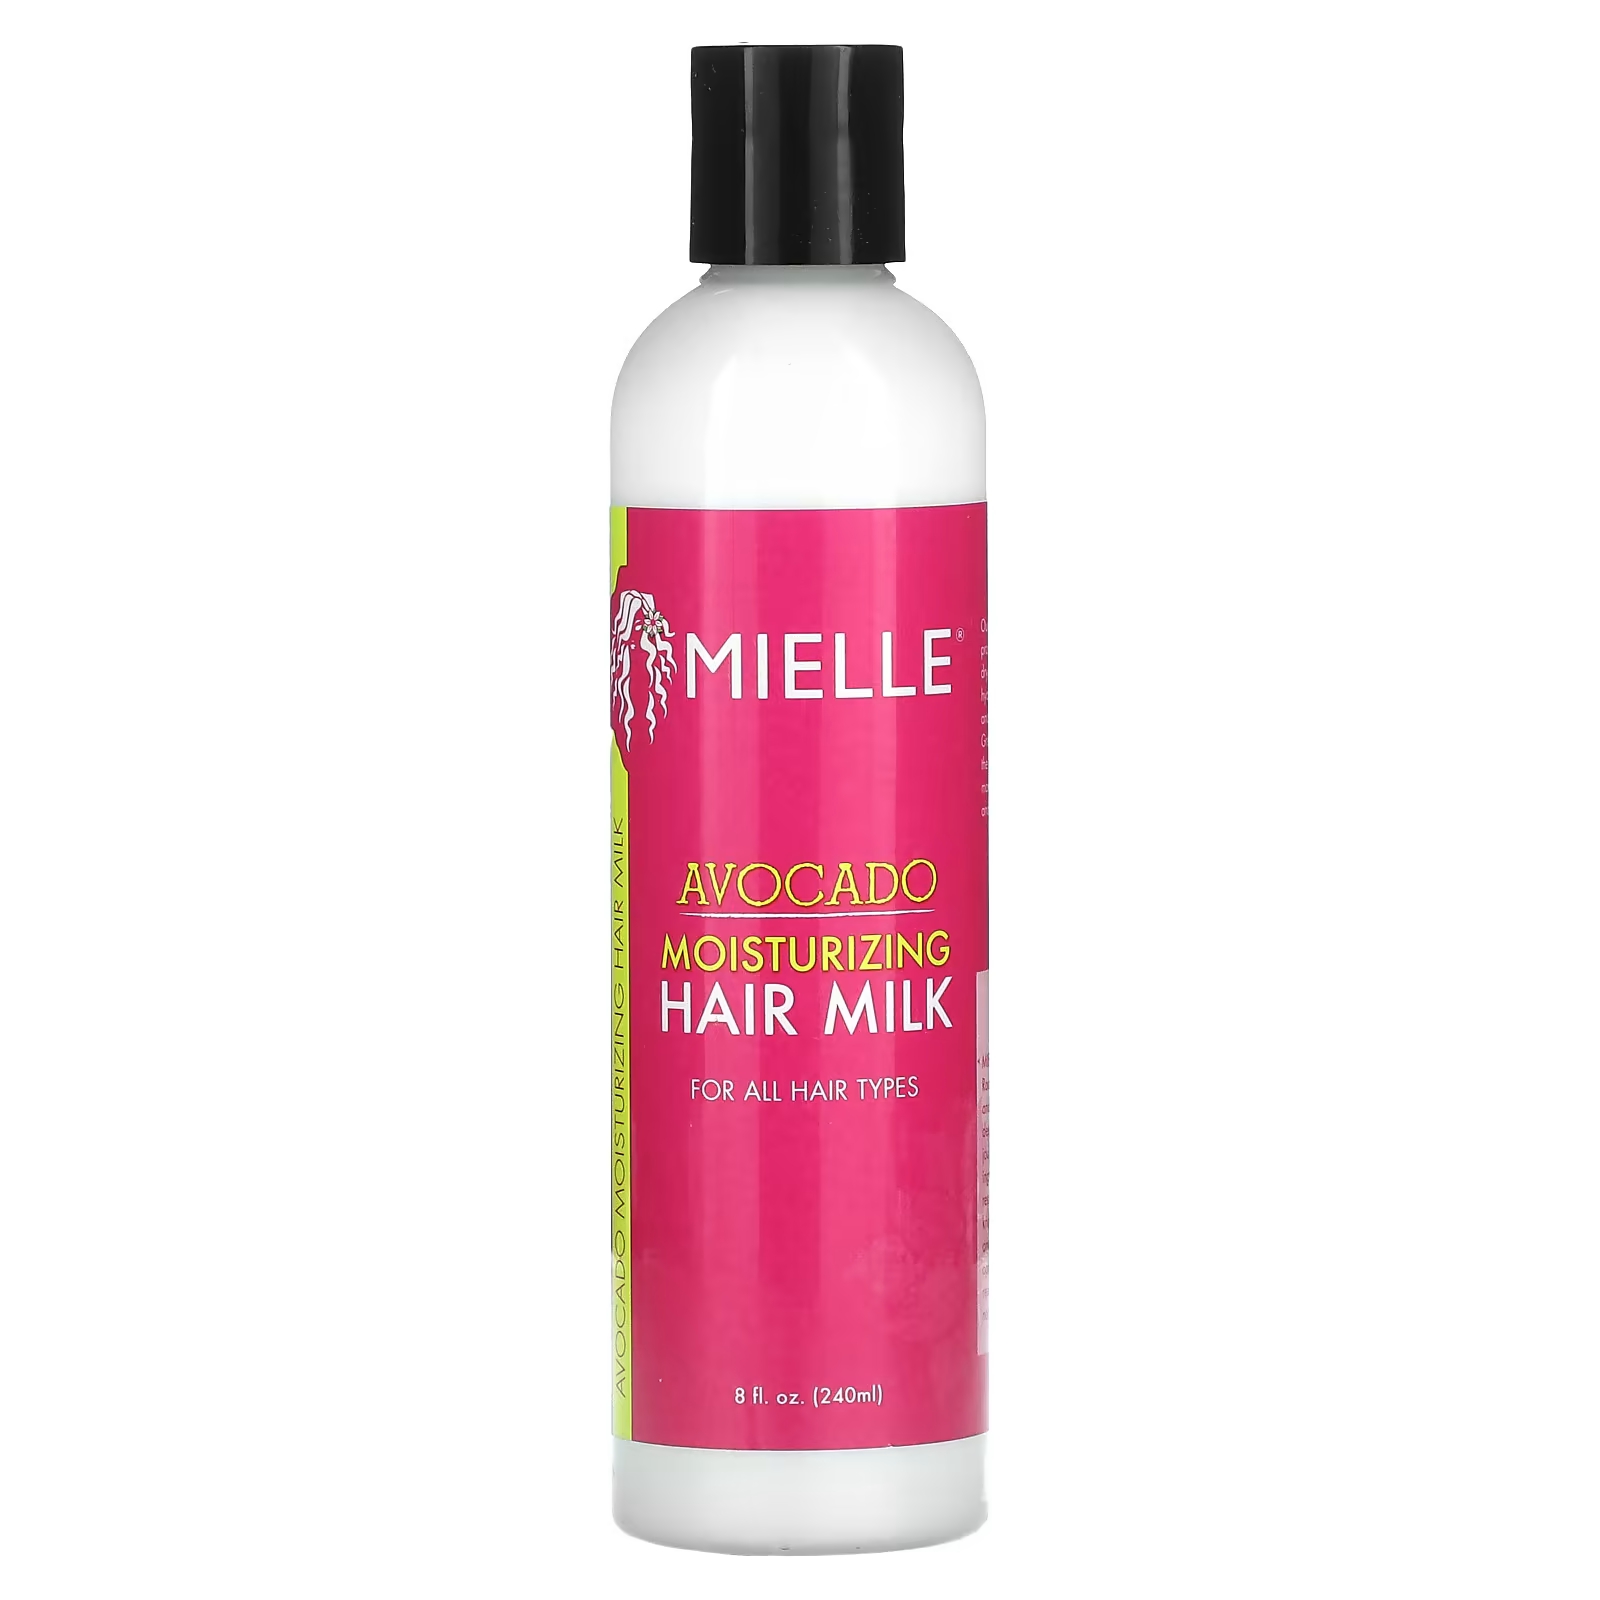 Молочко для волос Mielle увлажняющее с авокадо, 240 мл увлажняющее молочко для волос с авокадо 240мл mielle organics